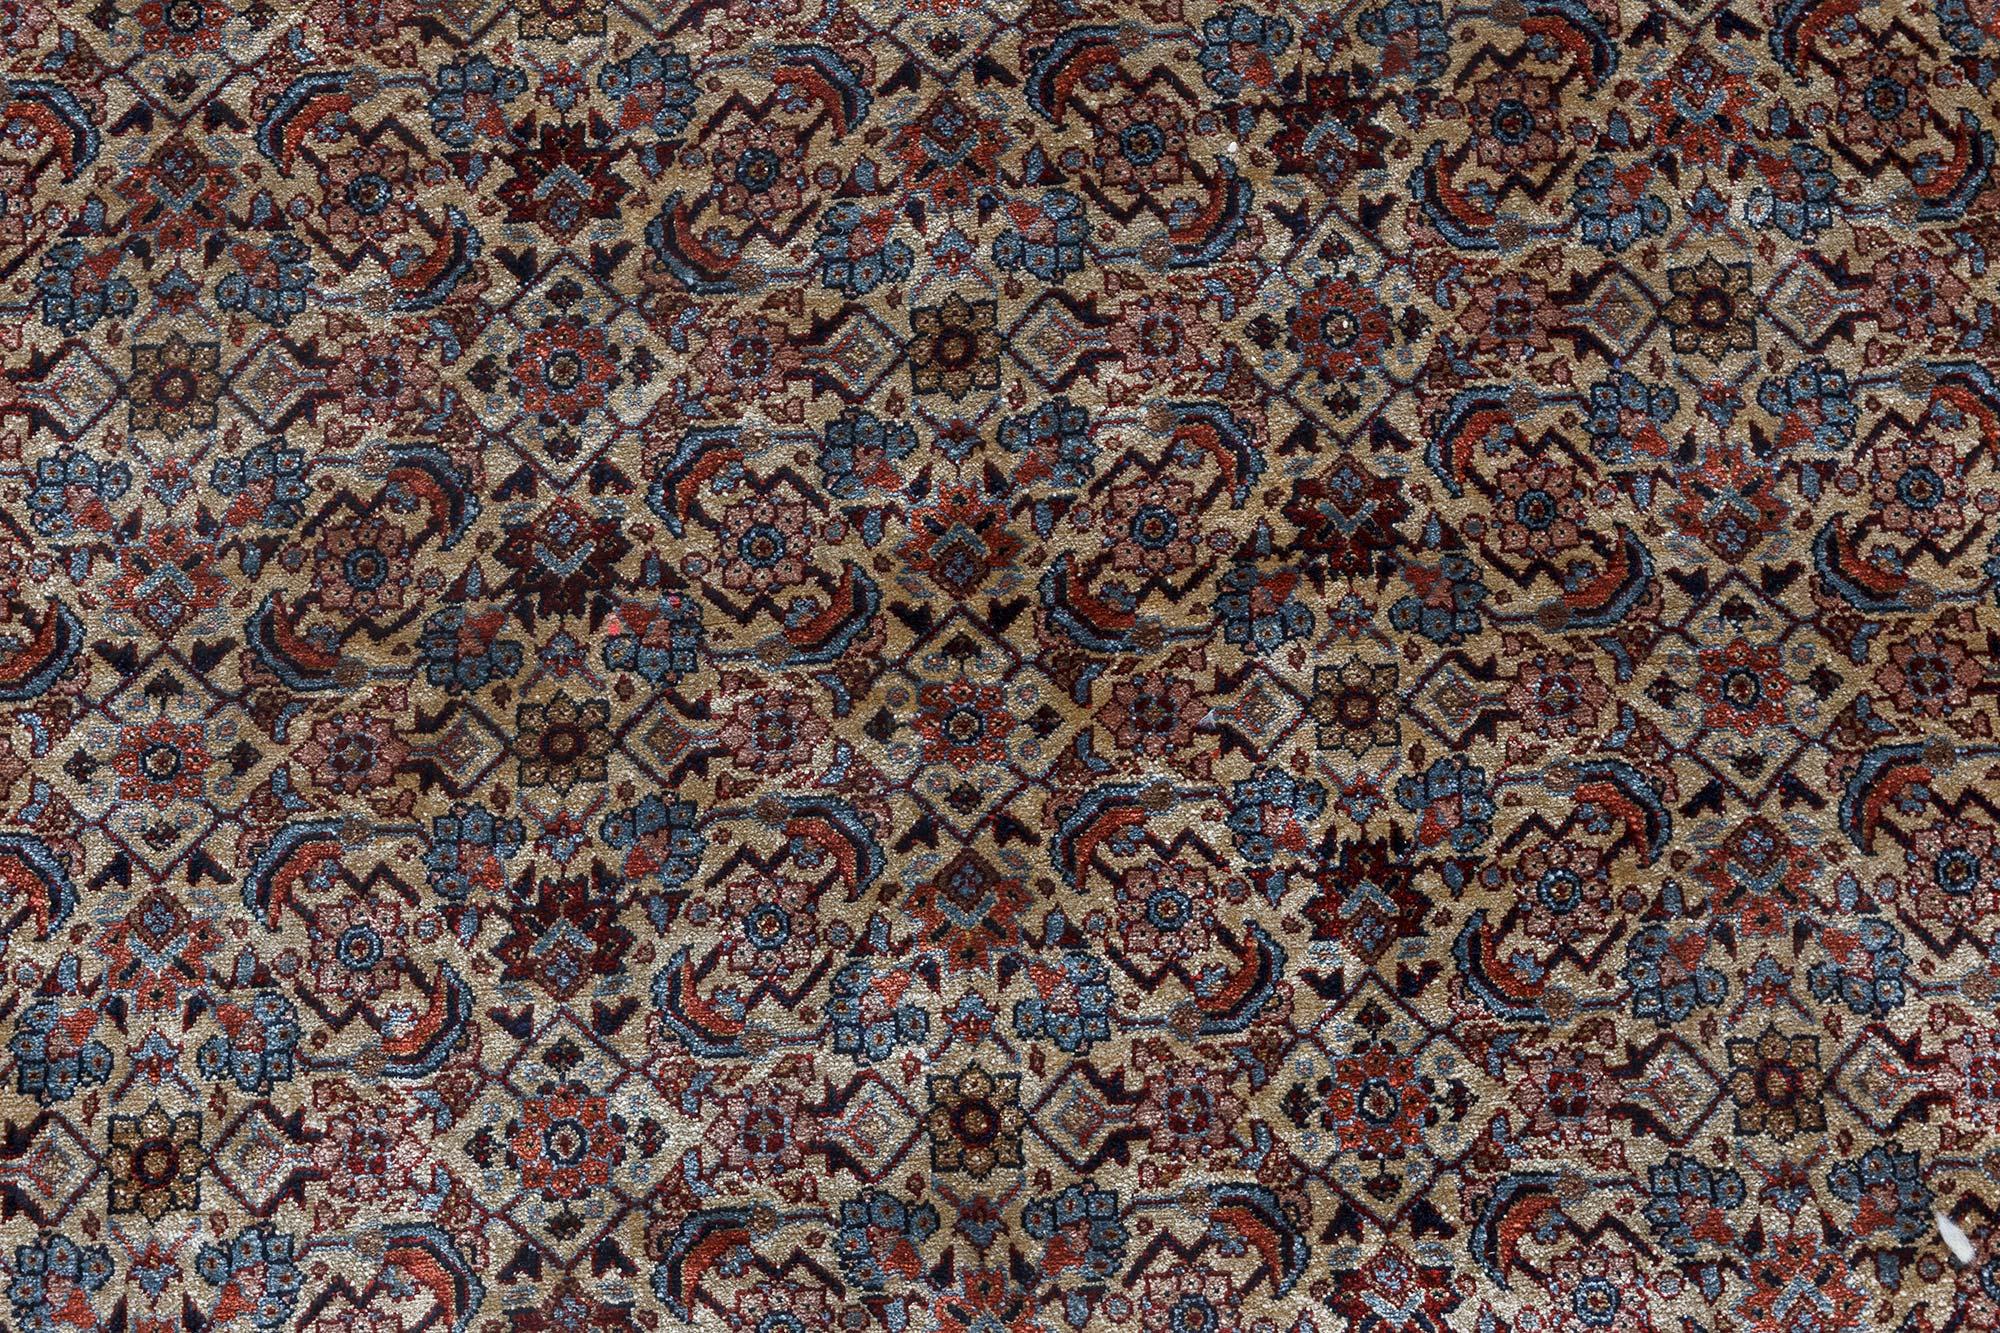 Small Vintage Egyptian Handmade Silk Rug
Size: 3'8